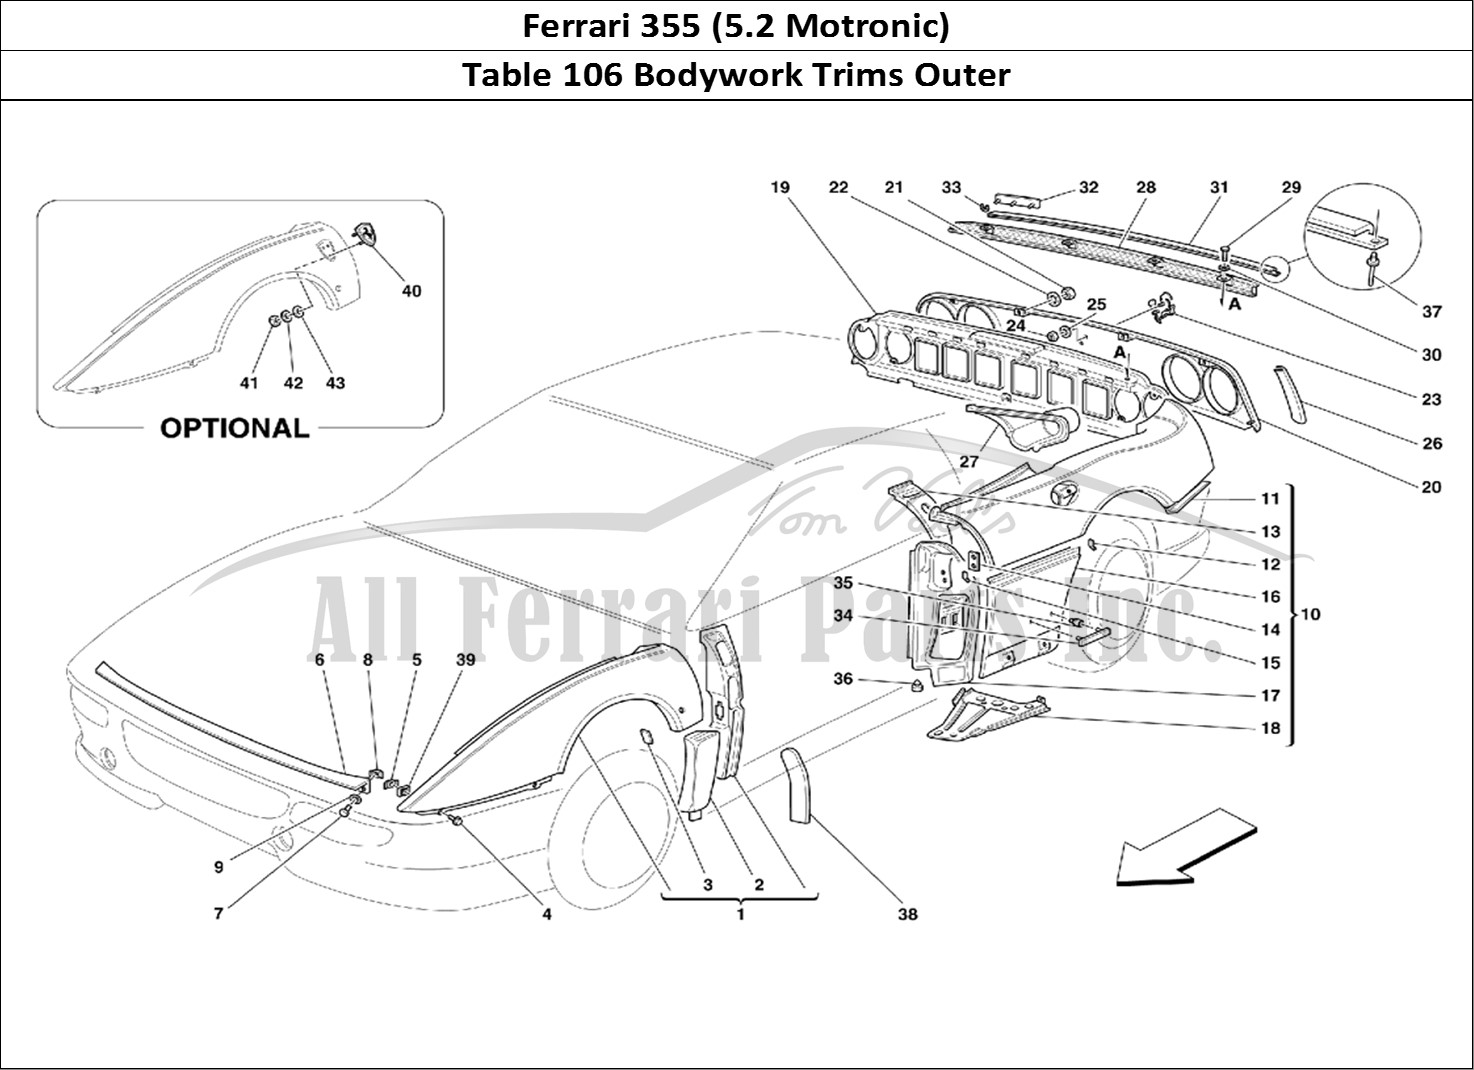 Ferrari Parts Ferrari 355 (5.2 Motronic) Page 106 Body - Outer Trims